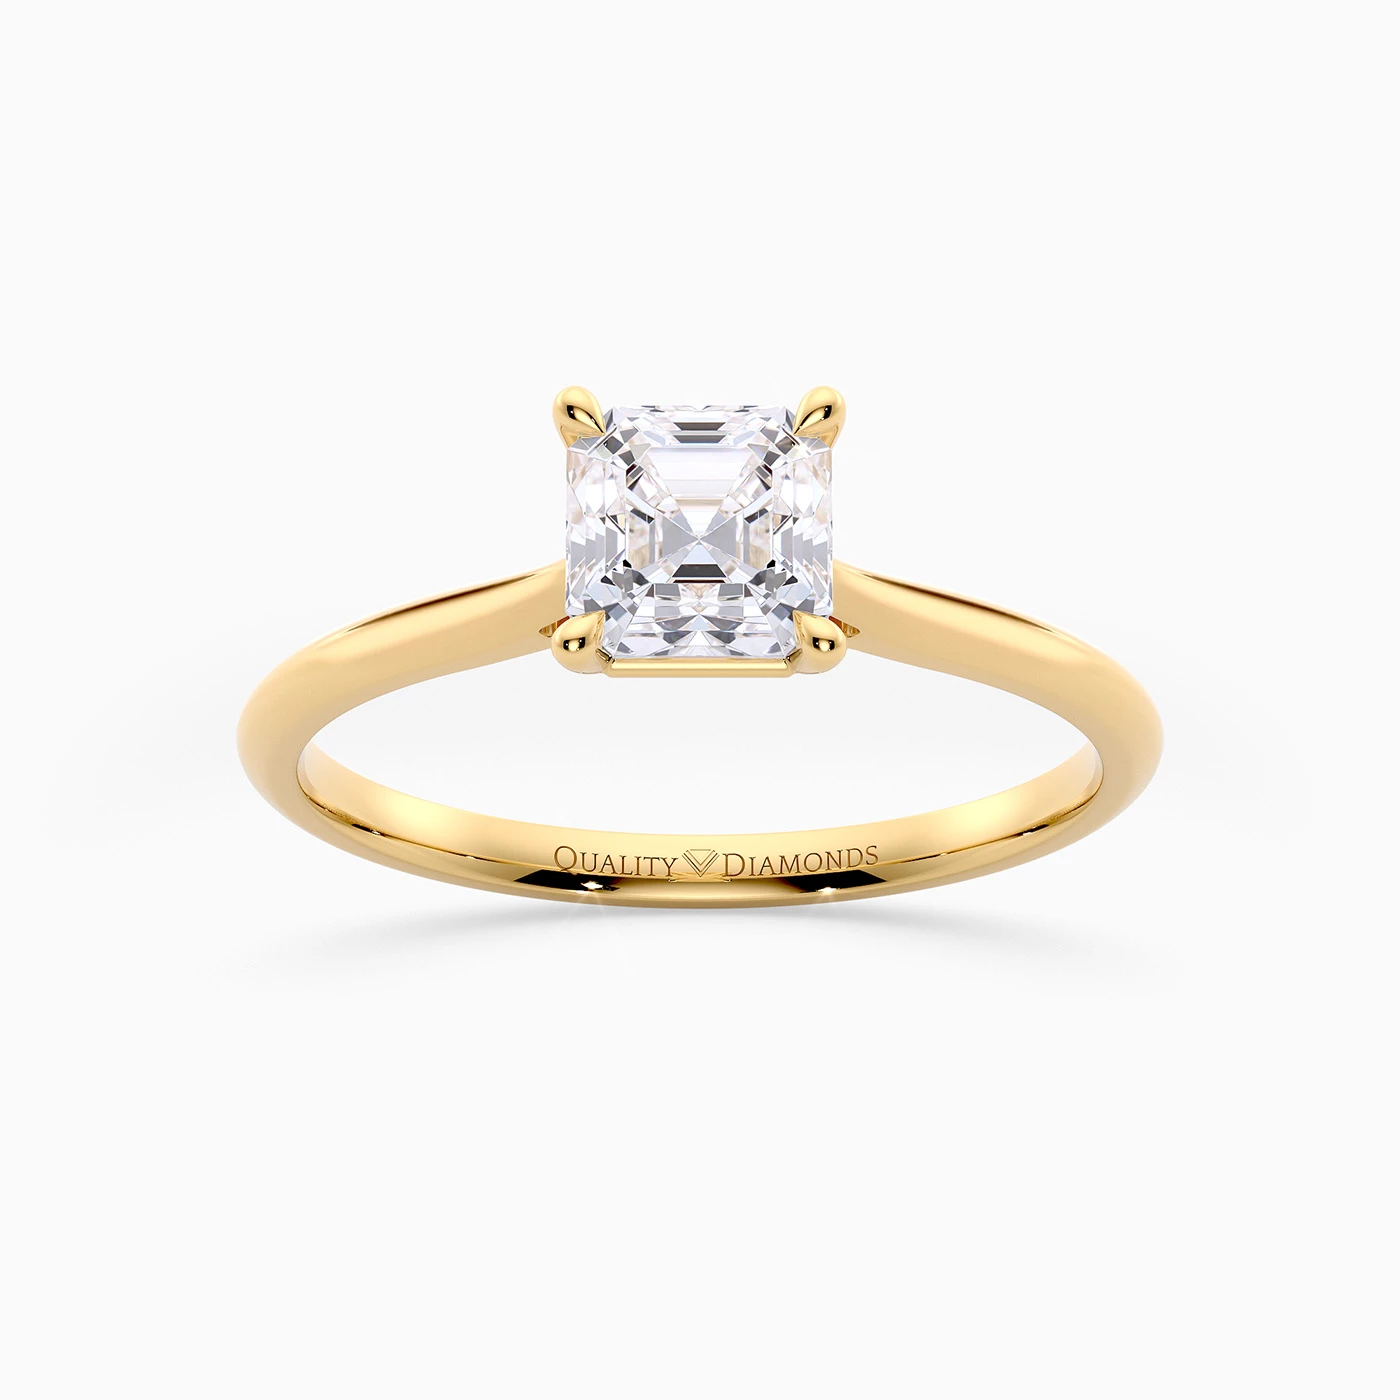 Asscher Carys Diamond Ring in 18K Yellow Gold